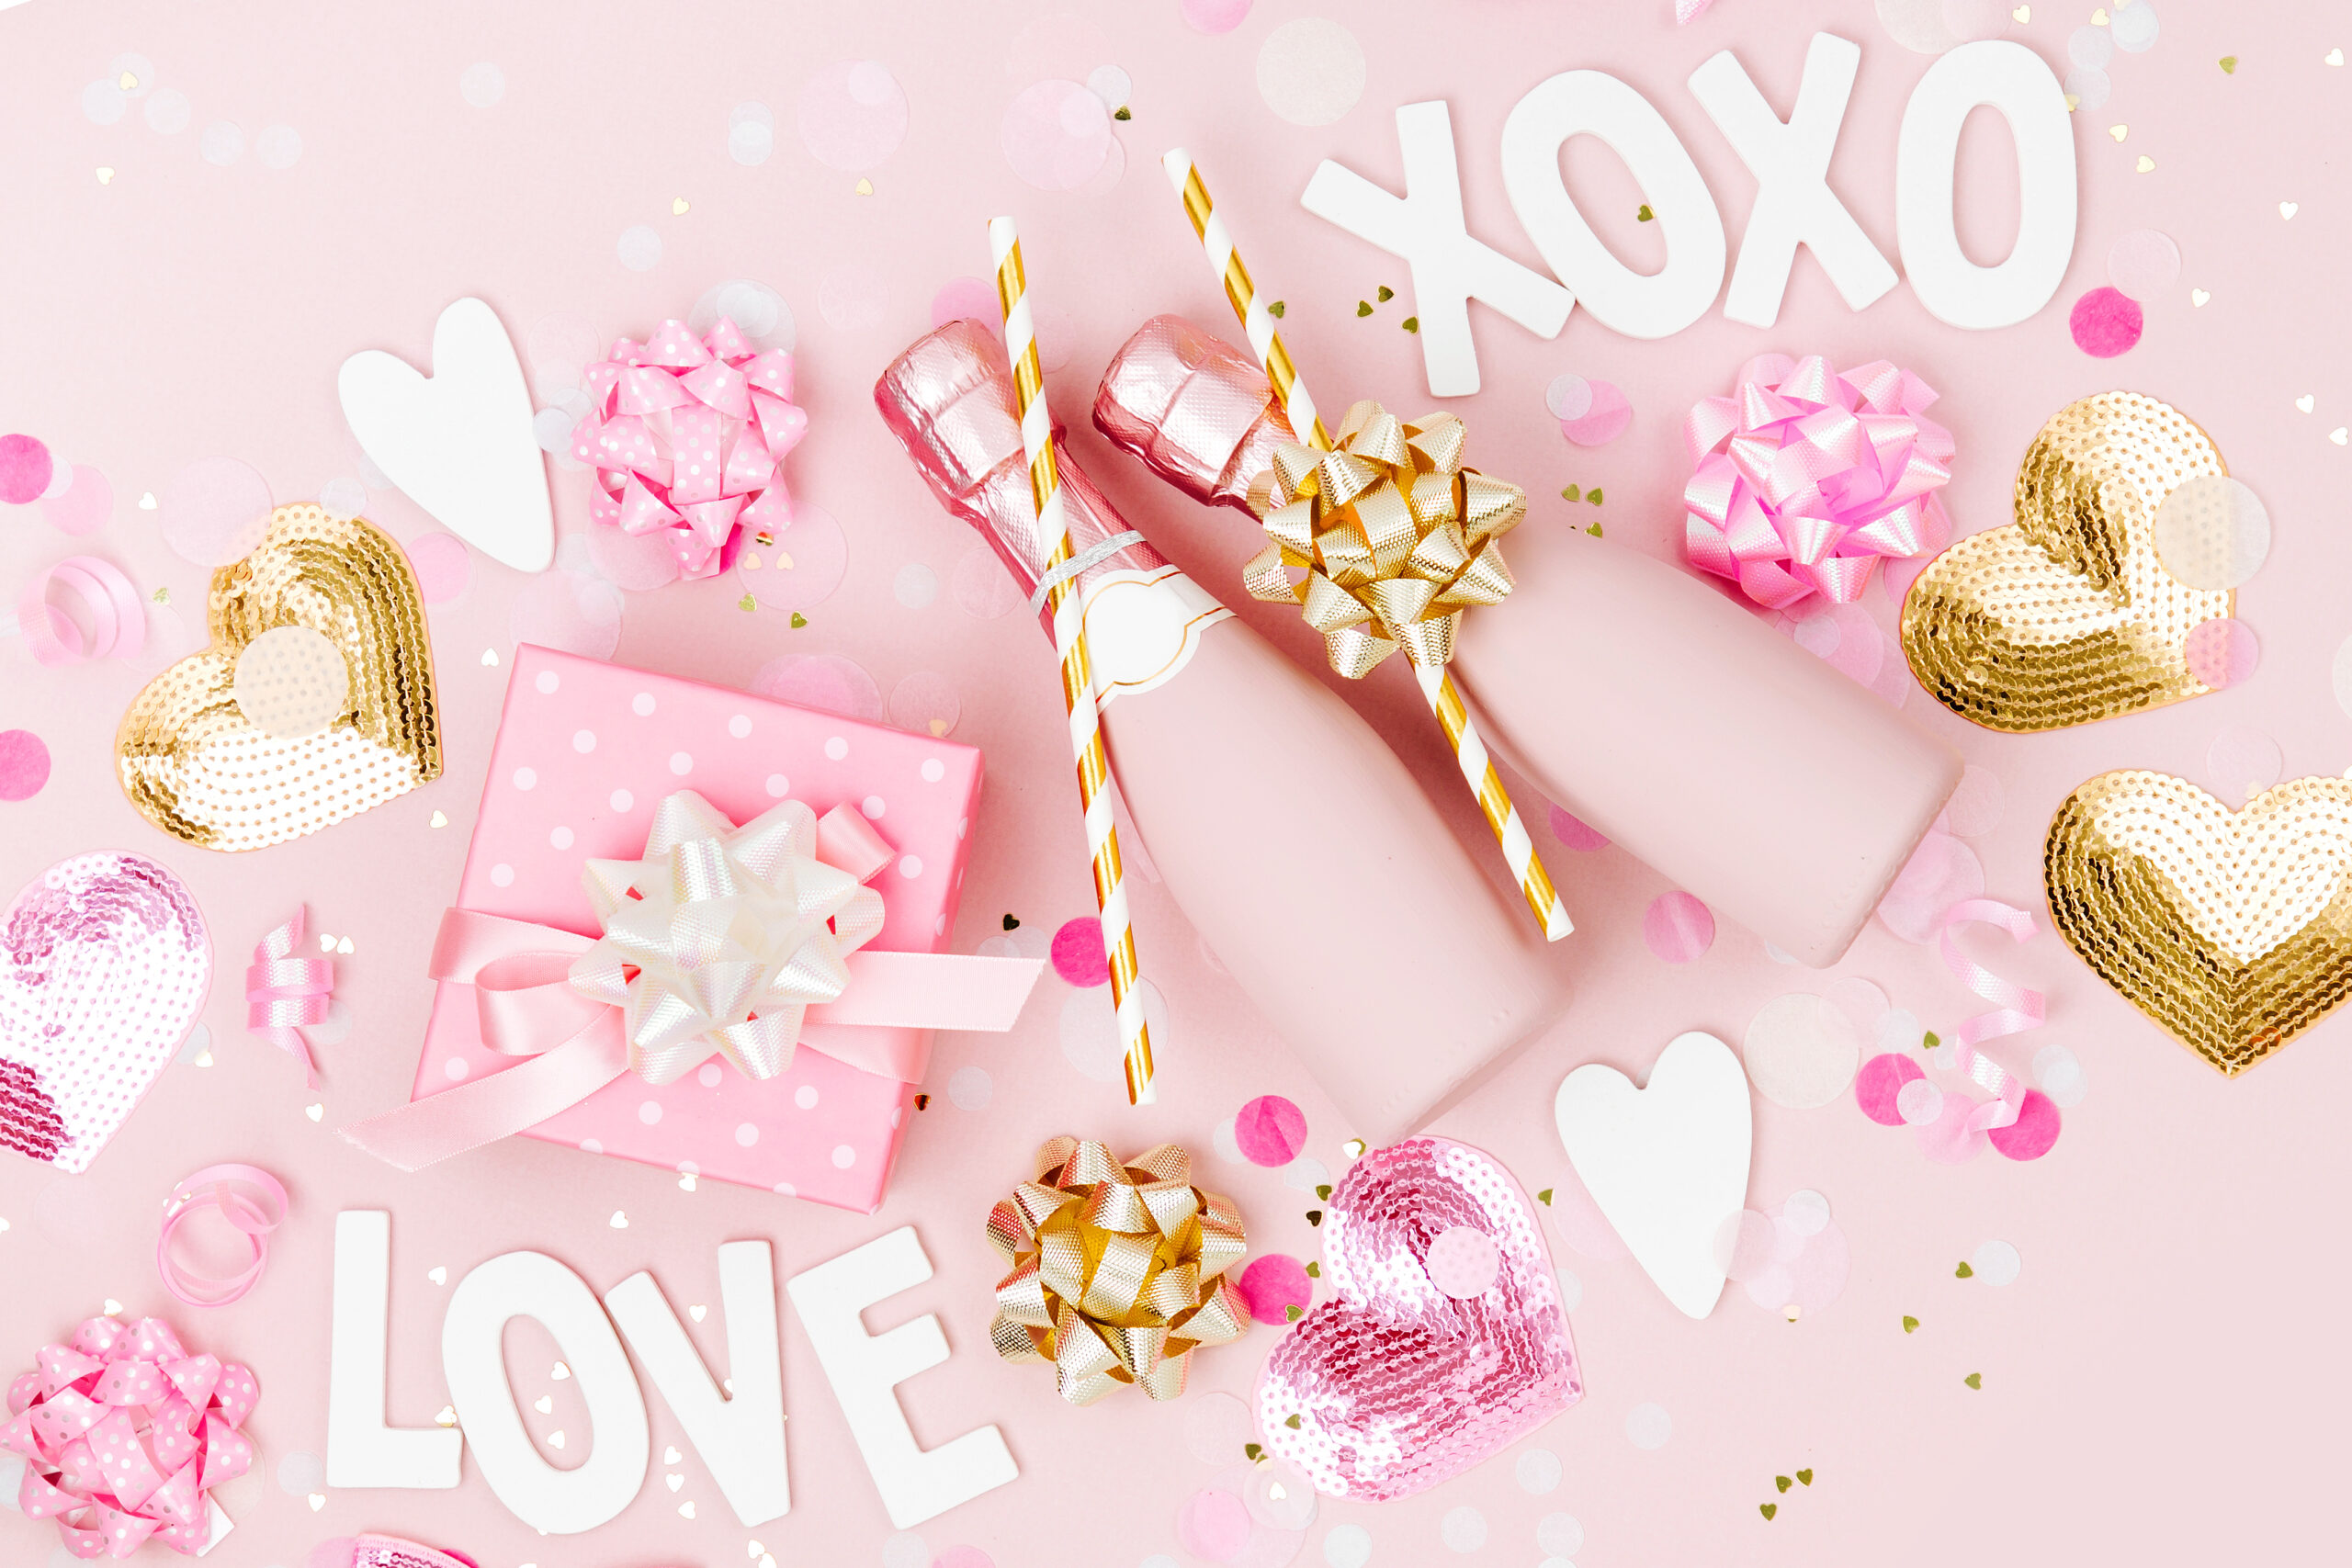 KatchOn, Felt Valentine Conversation Hearts Decorations - Pack of 12, No DIY | Valentines Day Decor | Valentines Decorations Outdoor | Valentine